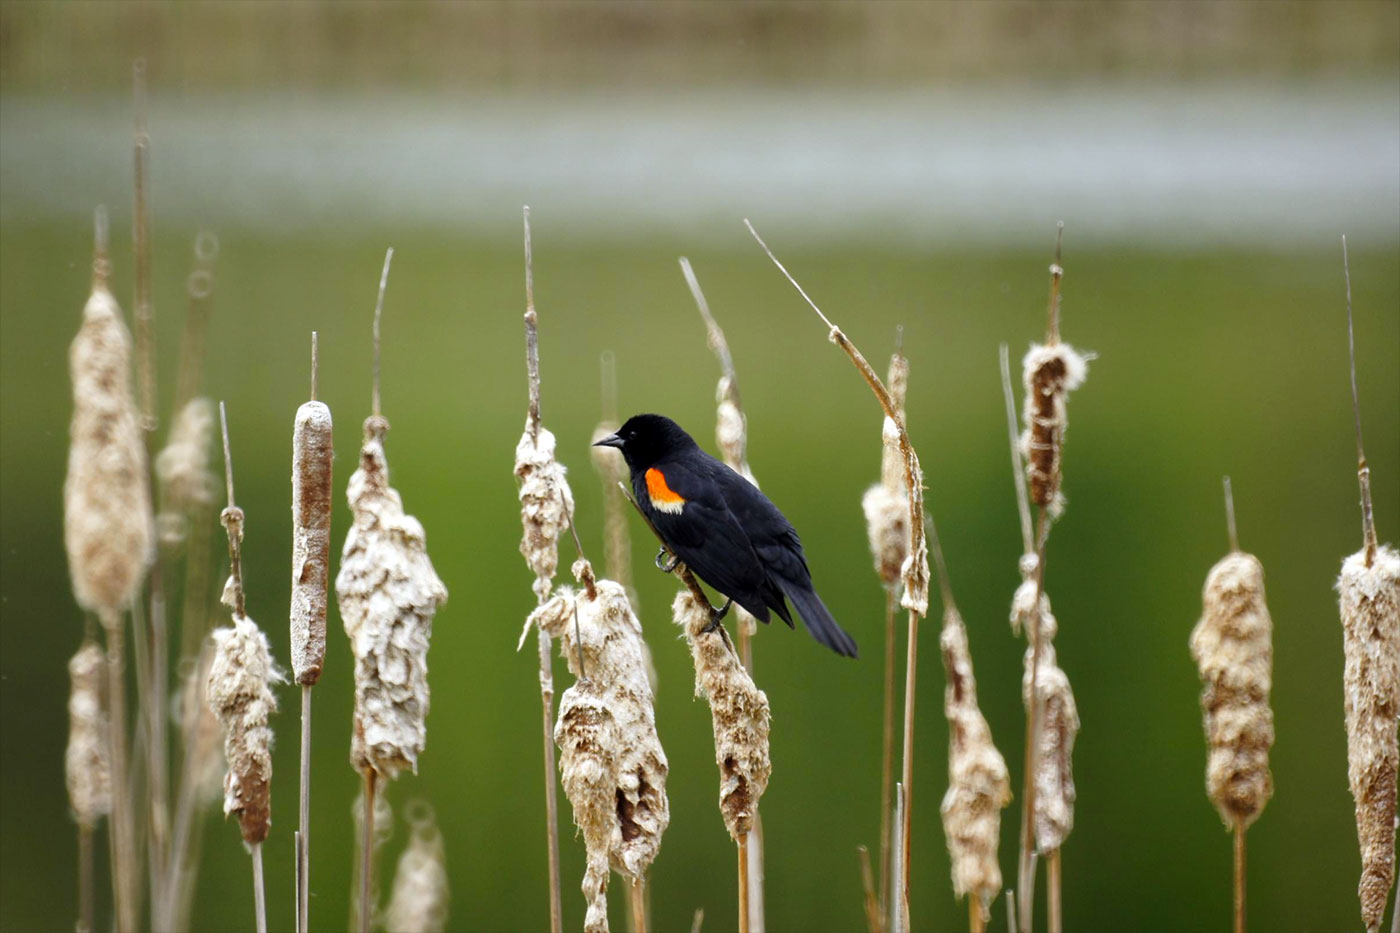 Red-winged blackbird on stalk in field